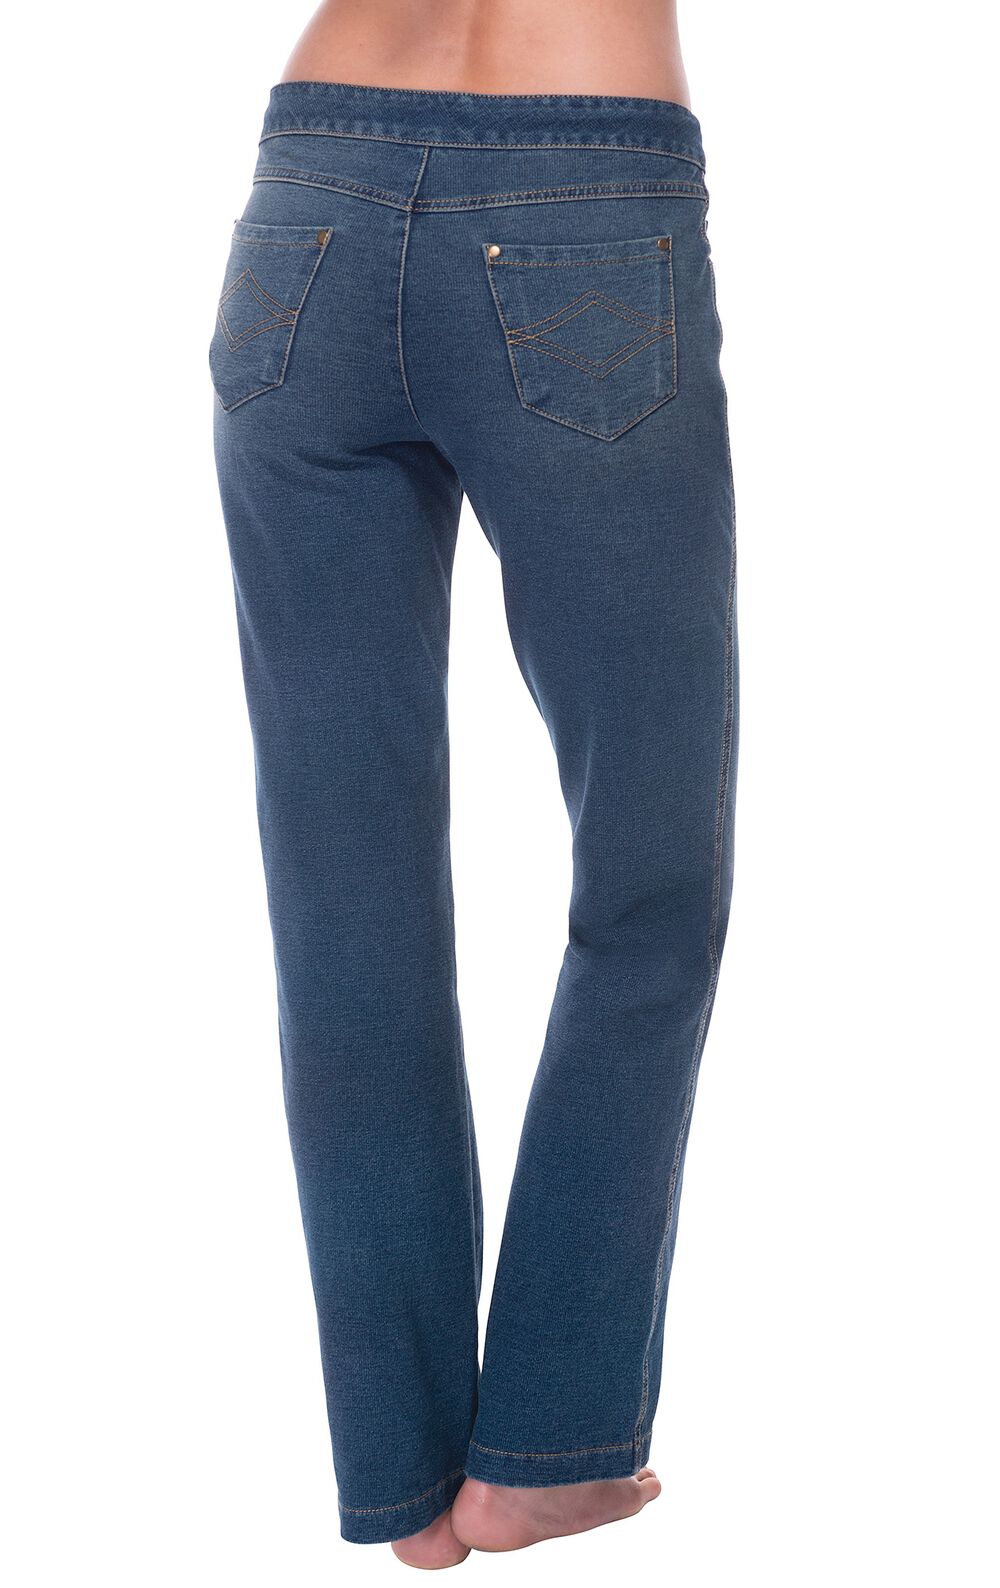 PajamaJeans Womens Petite Bootcut Stretch Knit Denim Jeans